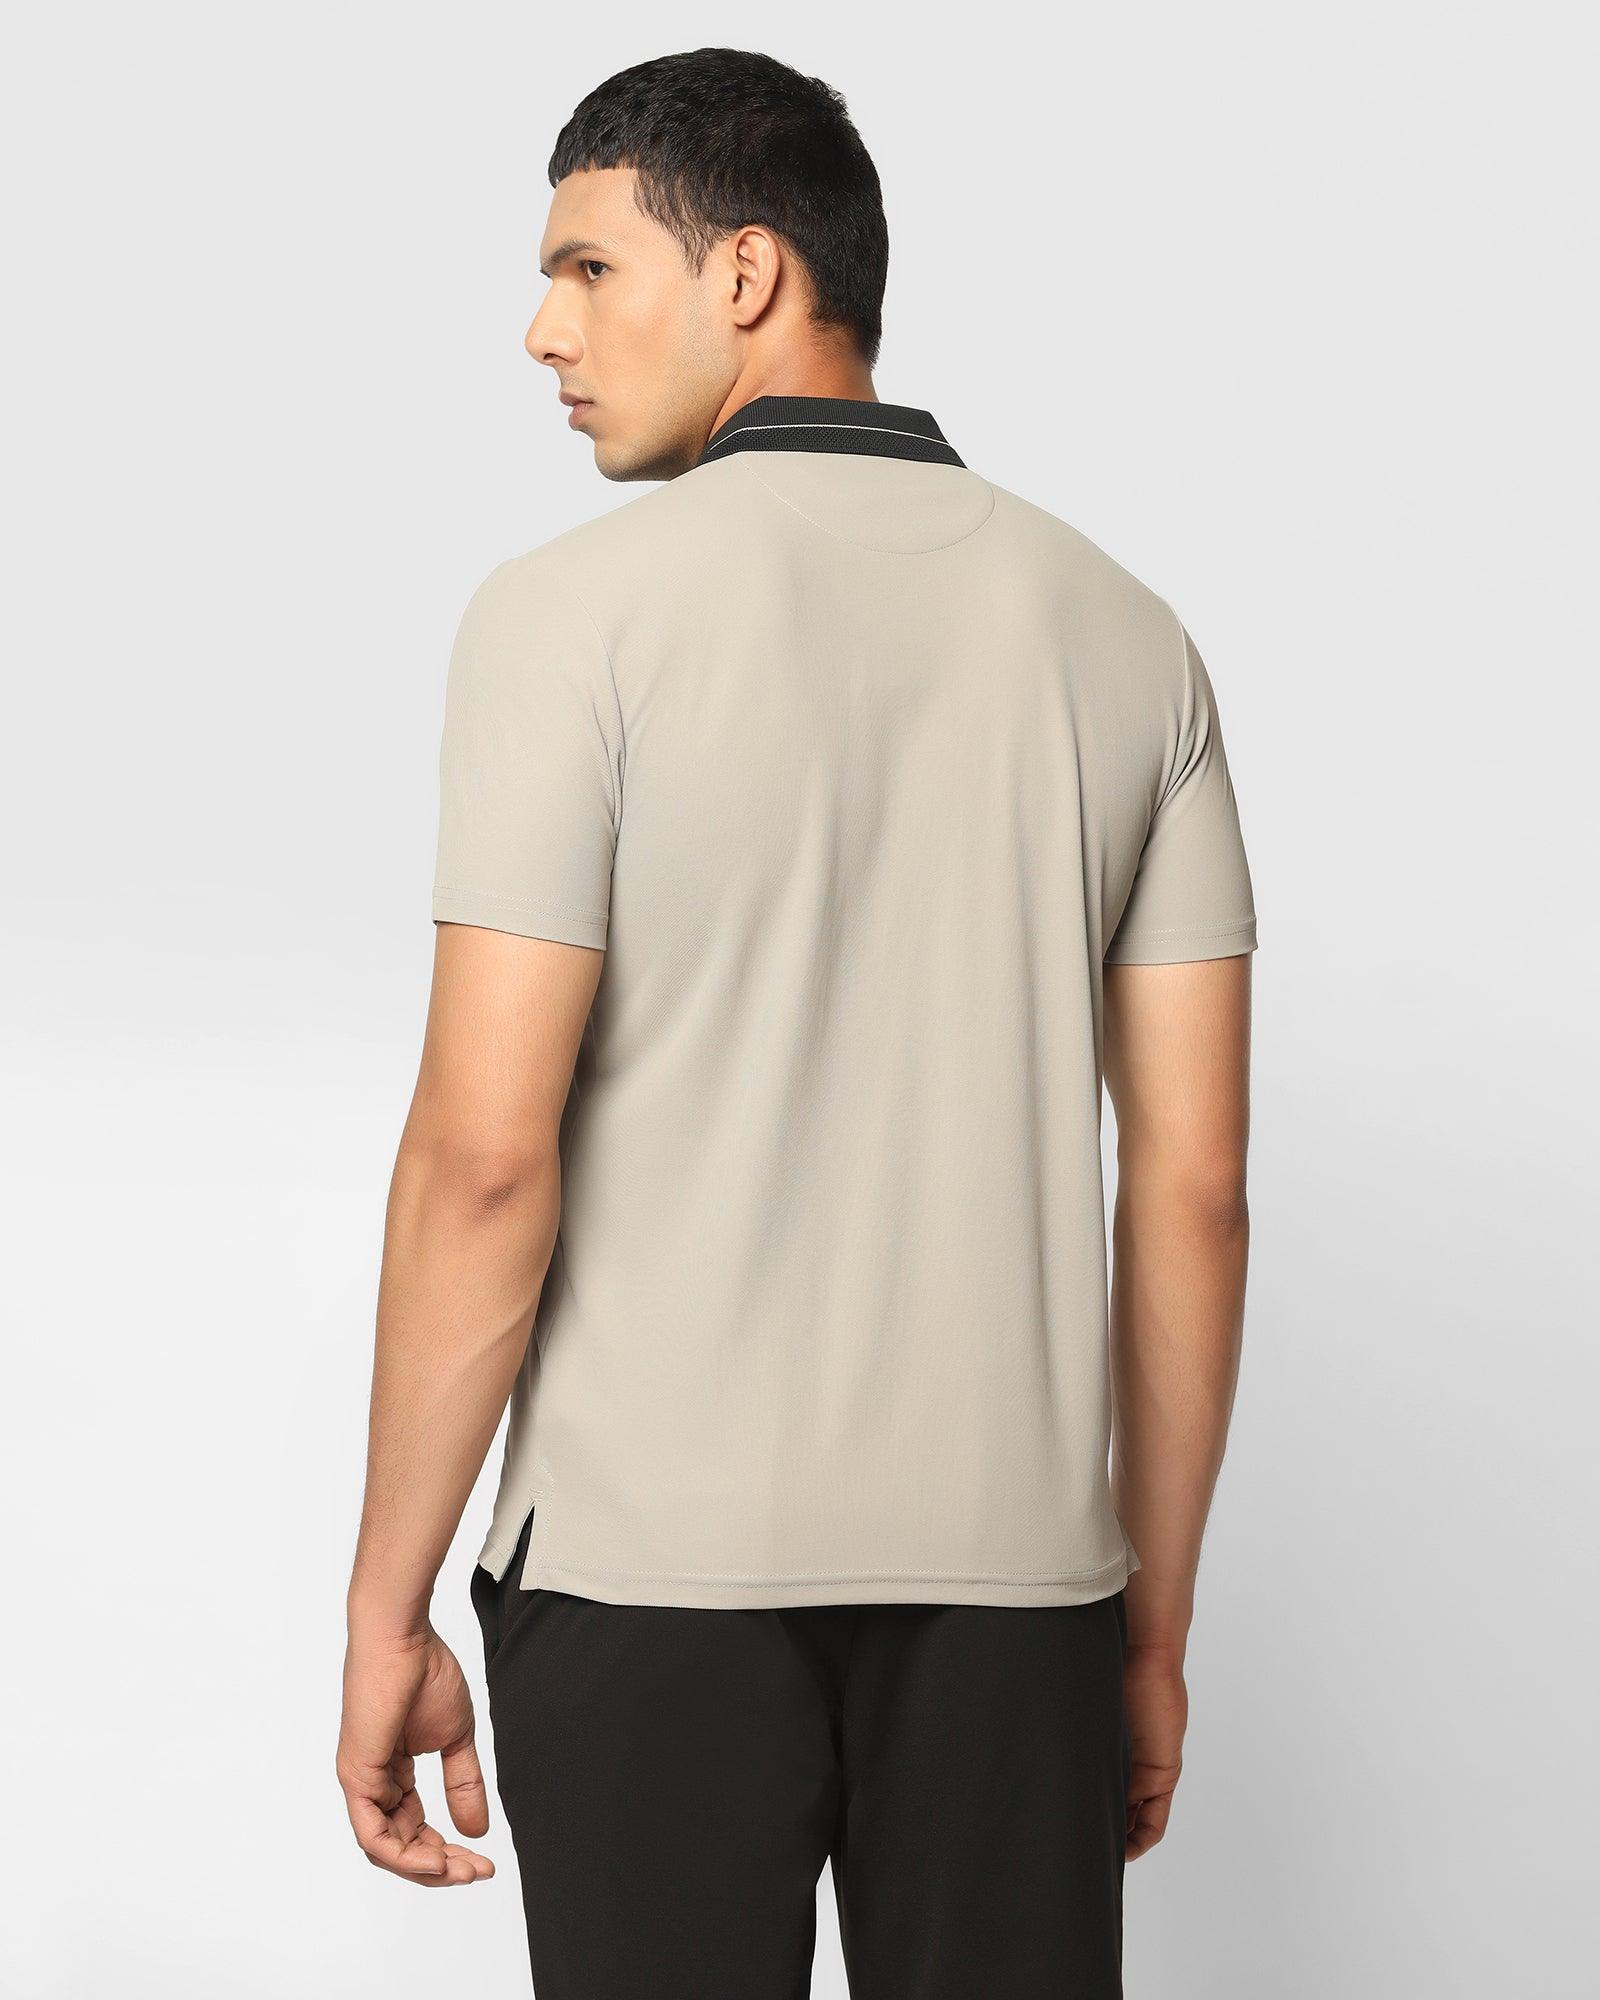 TechPro Polo Grey Solid T Shirt - Susan